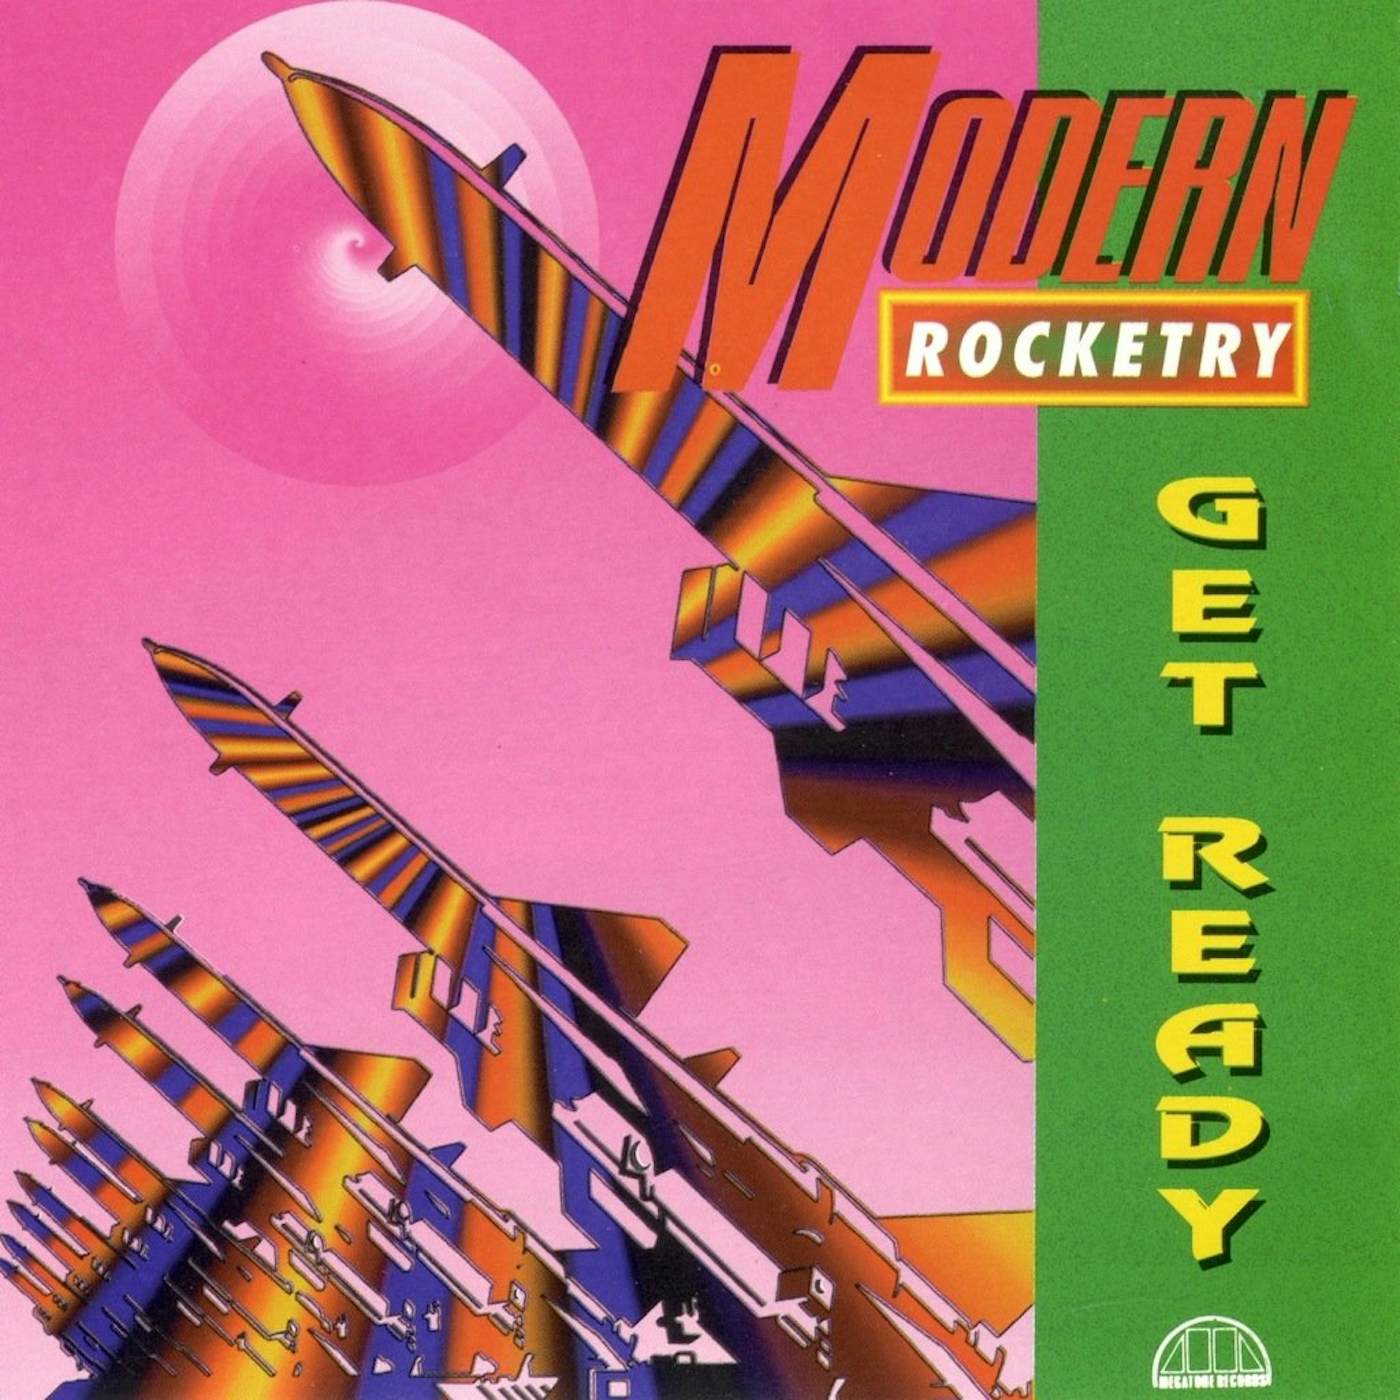 Modern Rocketry - Get Ready